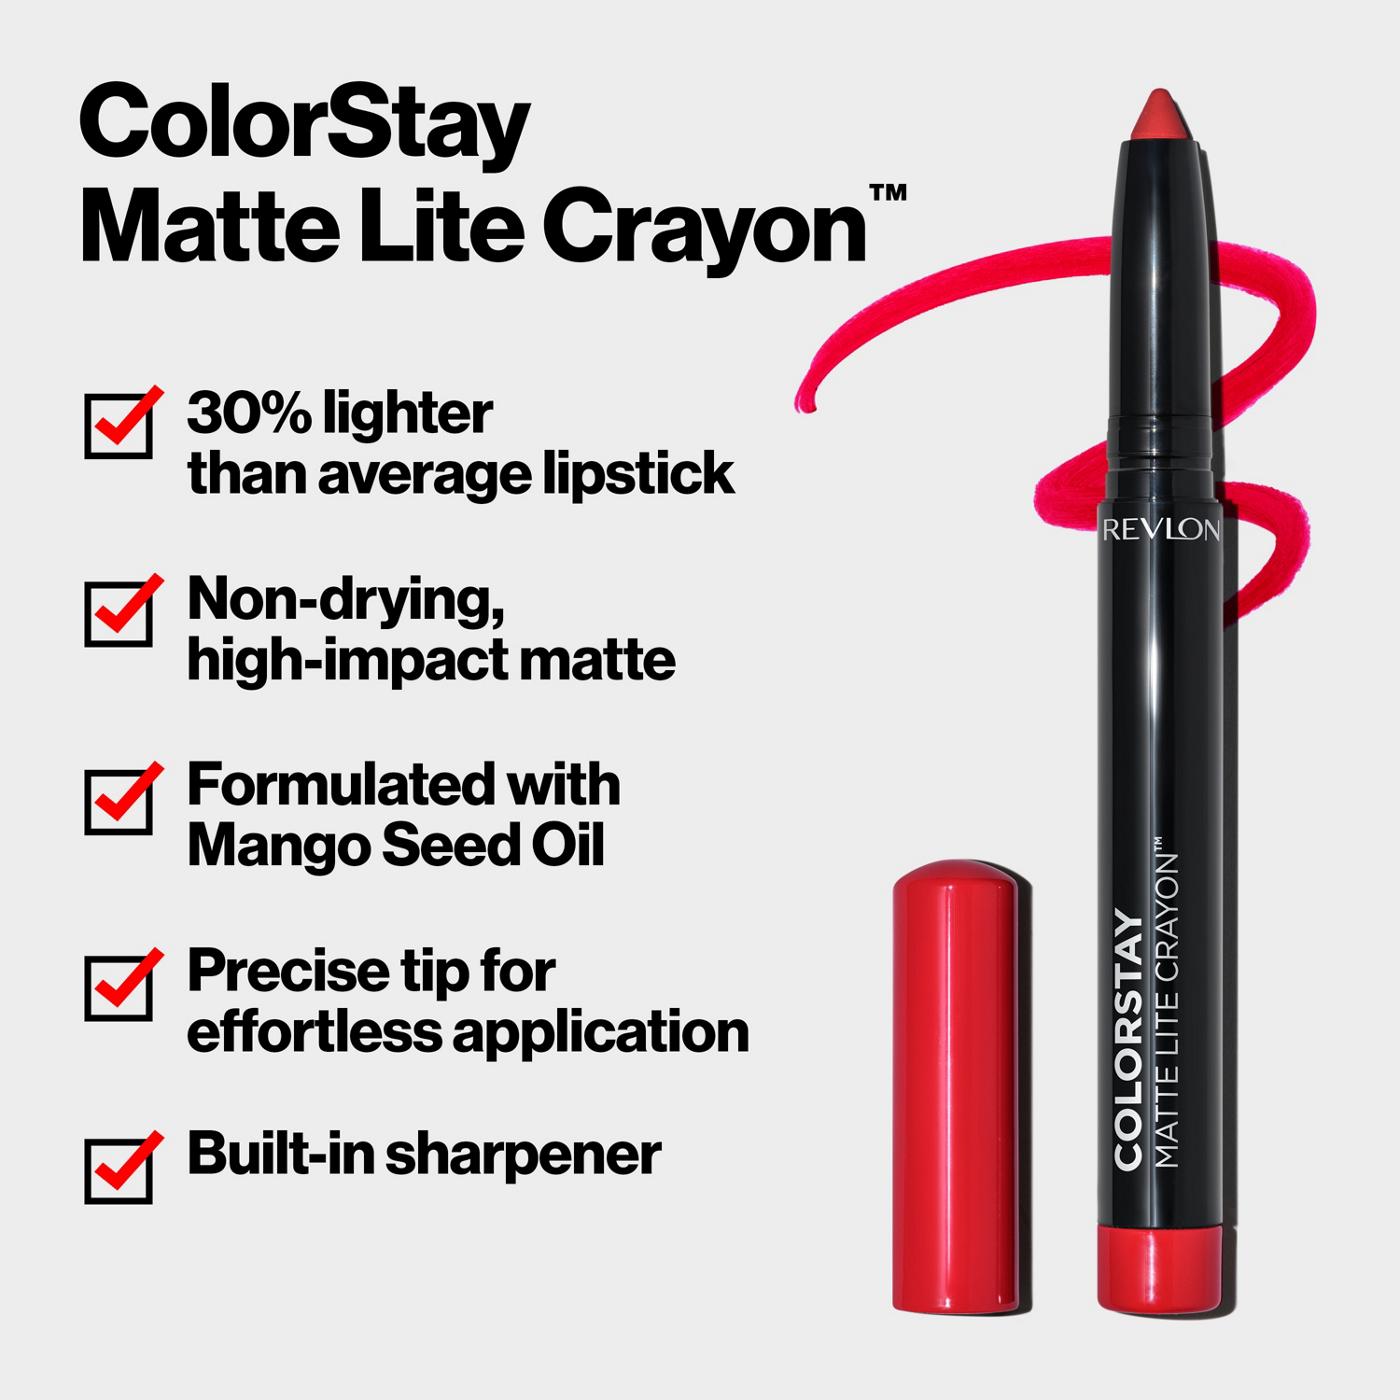 Revlon ColorStay Matte Lite Crayon Lipstick - Mile High; image 2 of 7